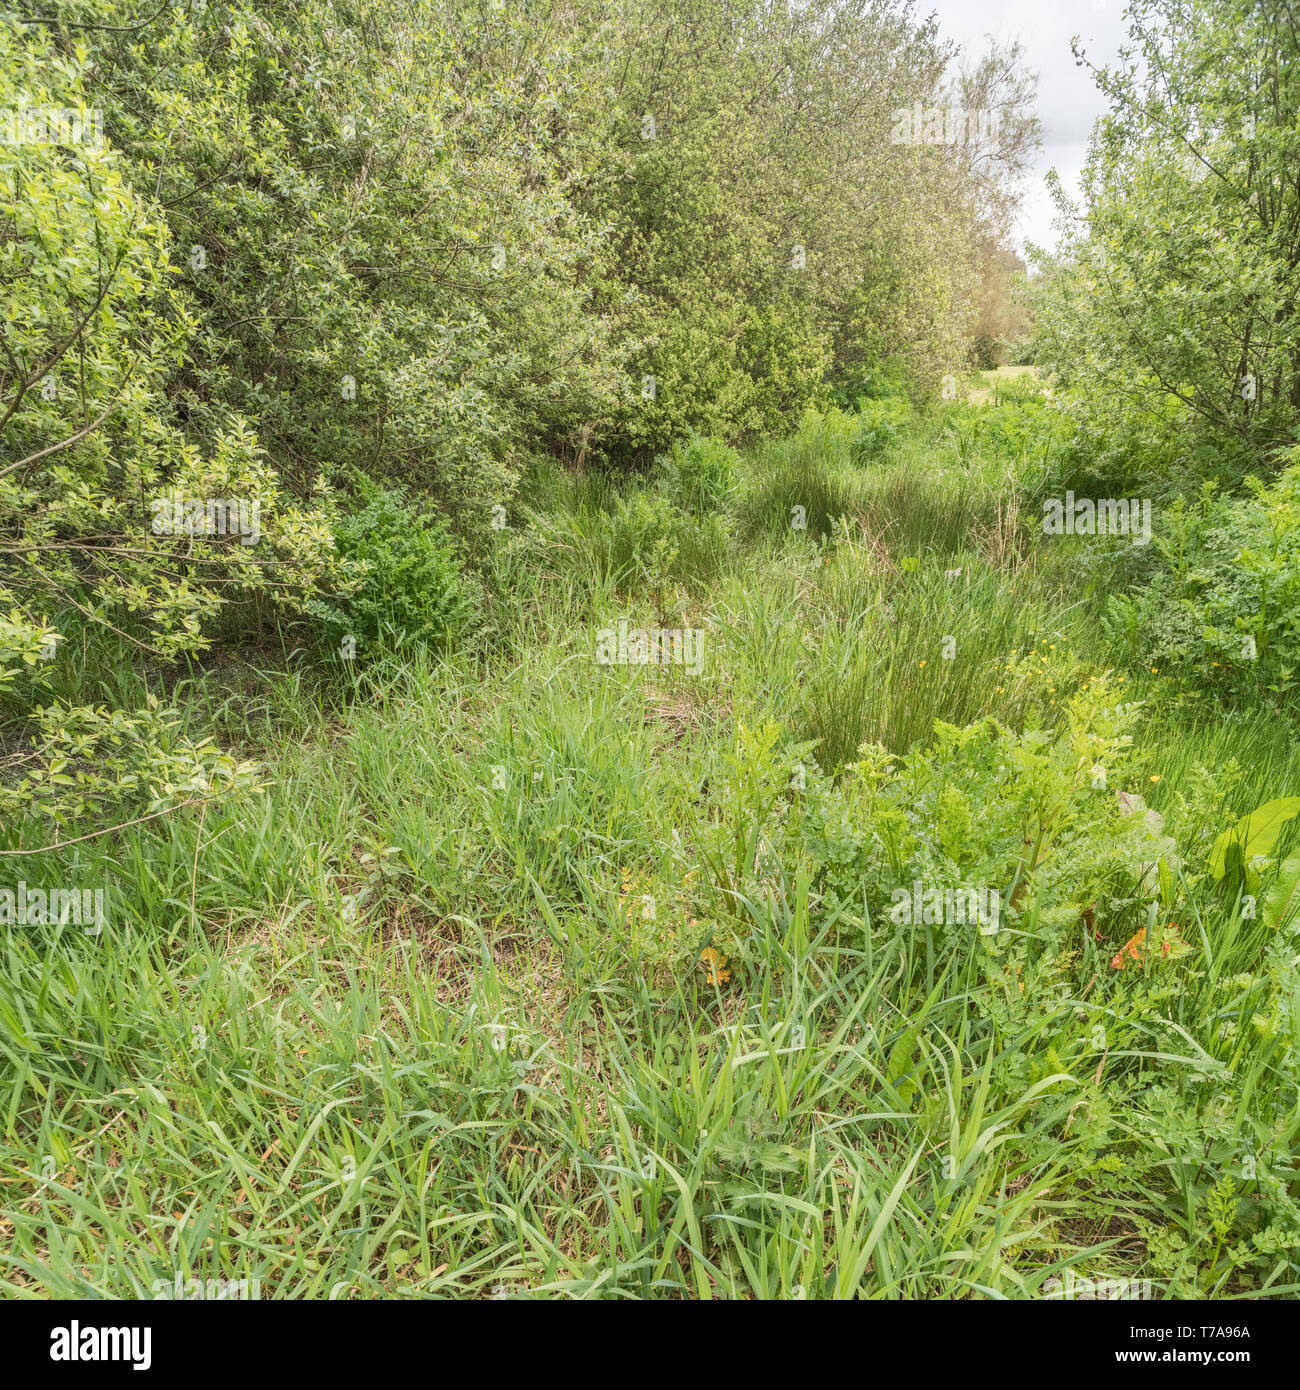 Example of wet boggy ground. Key identifiers Goat willow shrubs LHS, parsley-like leaves of Hemlock Water-dropwort, and spiky dark green Juncus Rush. Stock Photo